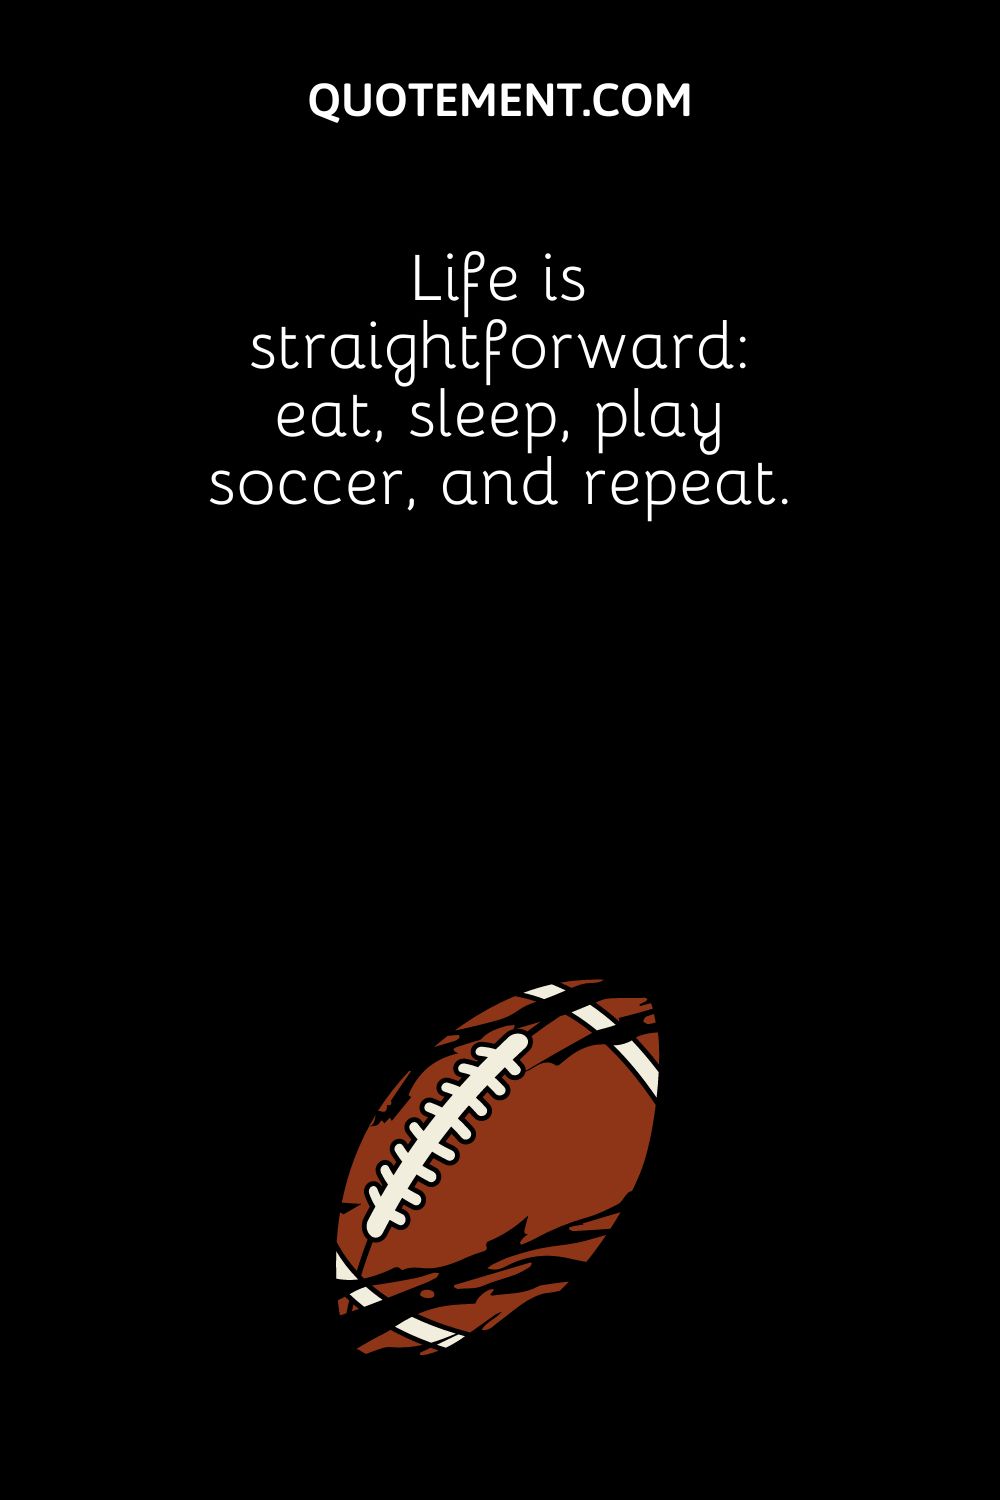 Life is straightforward eat, sleep, play soccer, and repeat